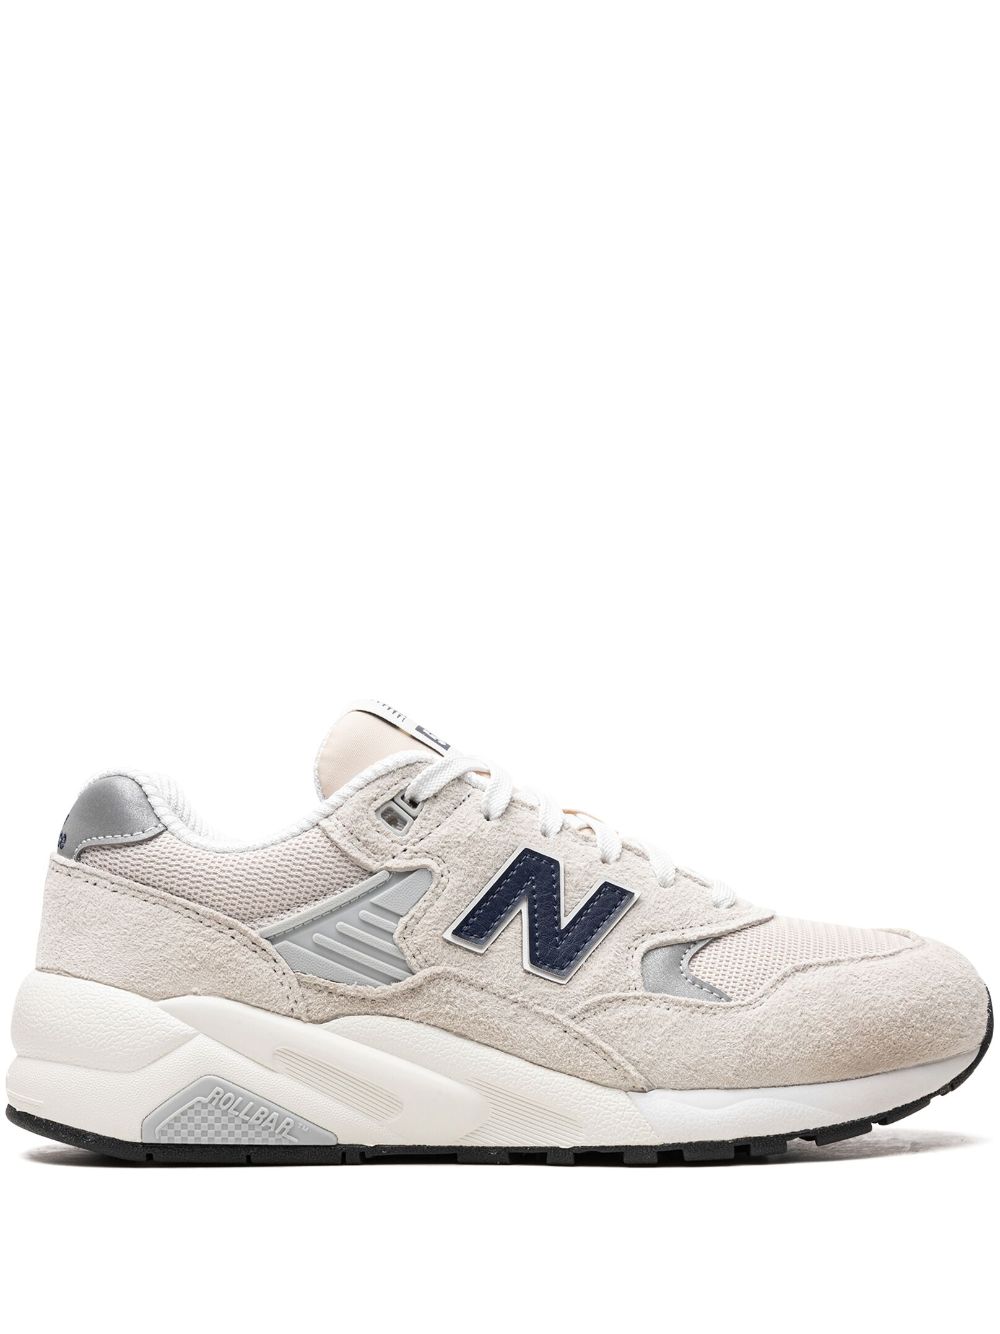 New Balance 580 "Nimbus Cloud" sneakers - White